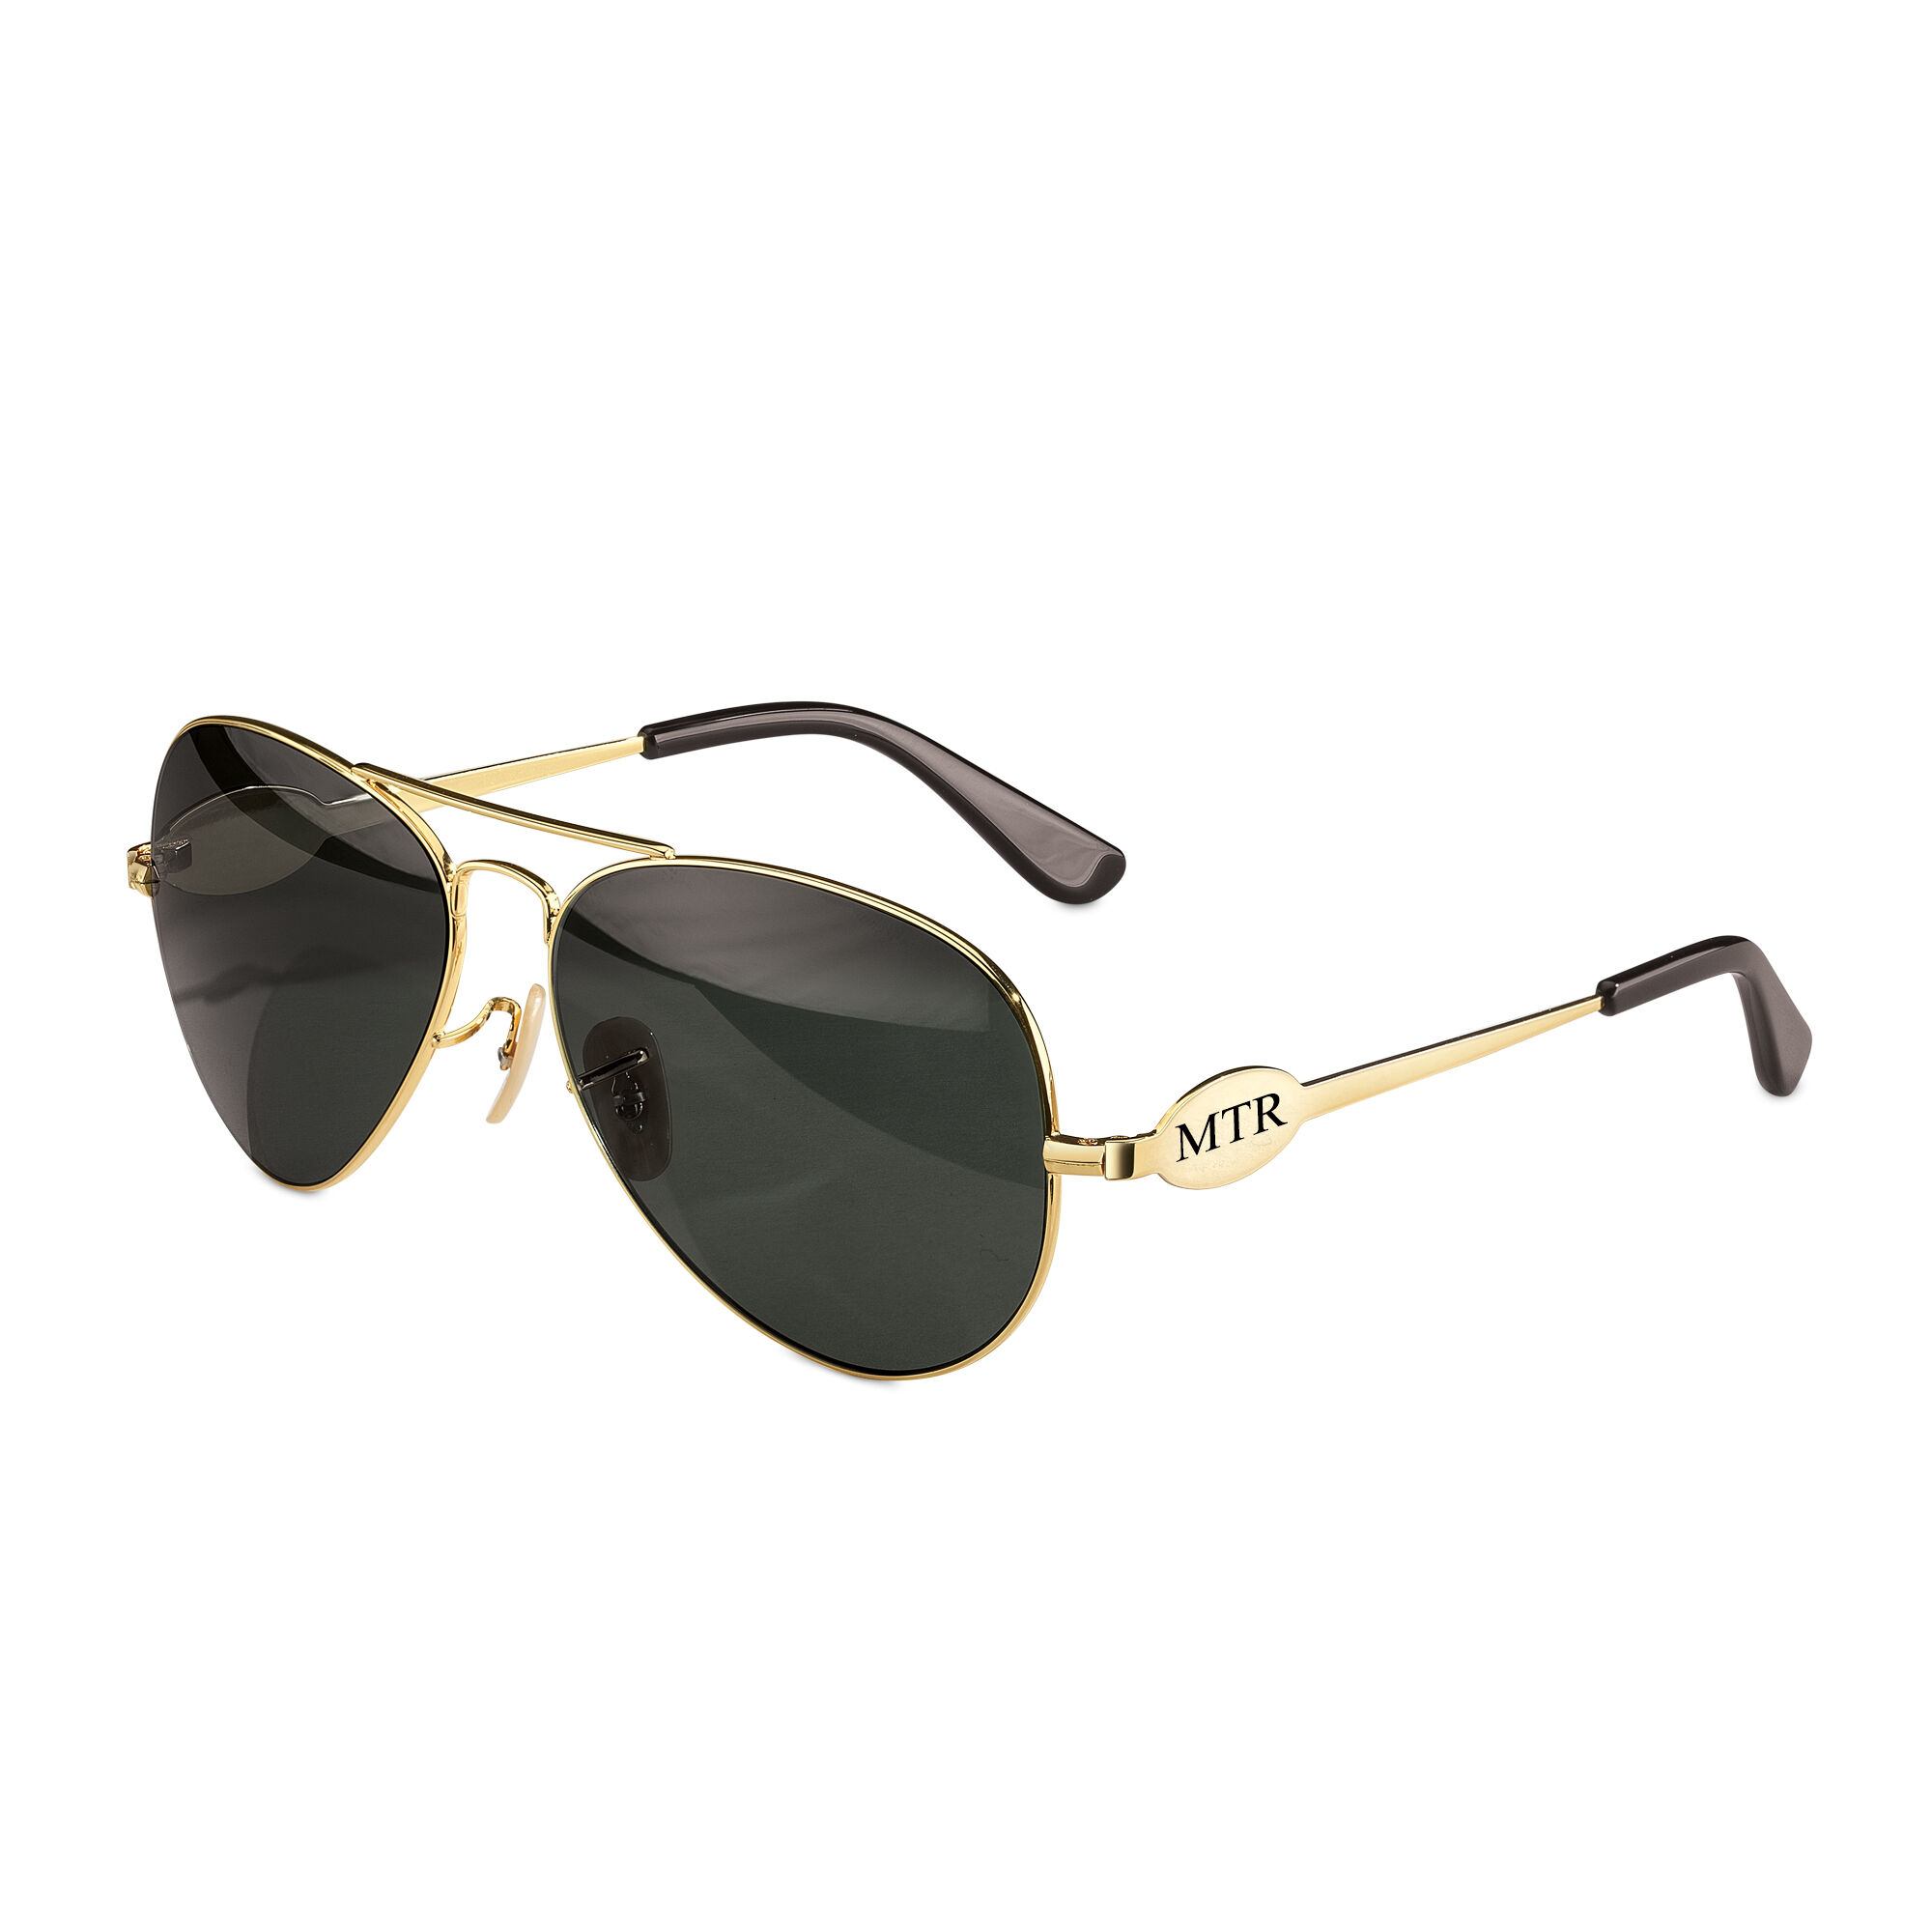 The Personalized Aviator Sunglasses 10994 0015 c glass